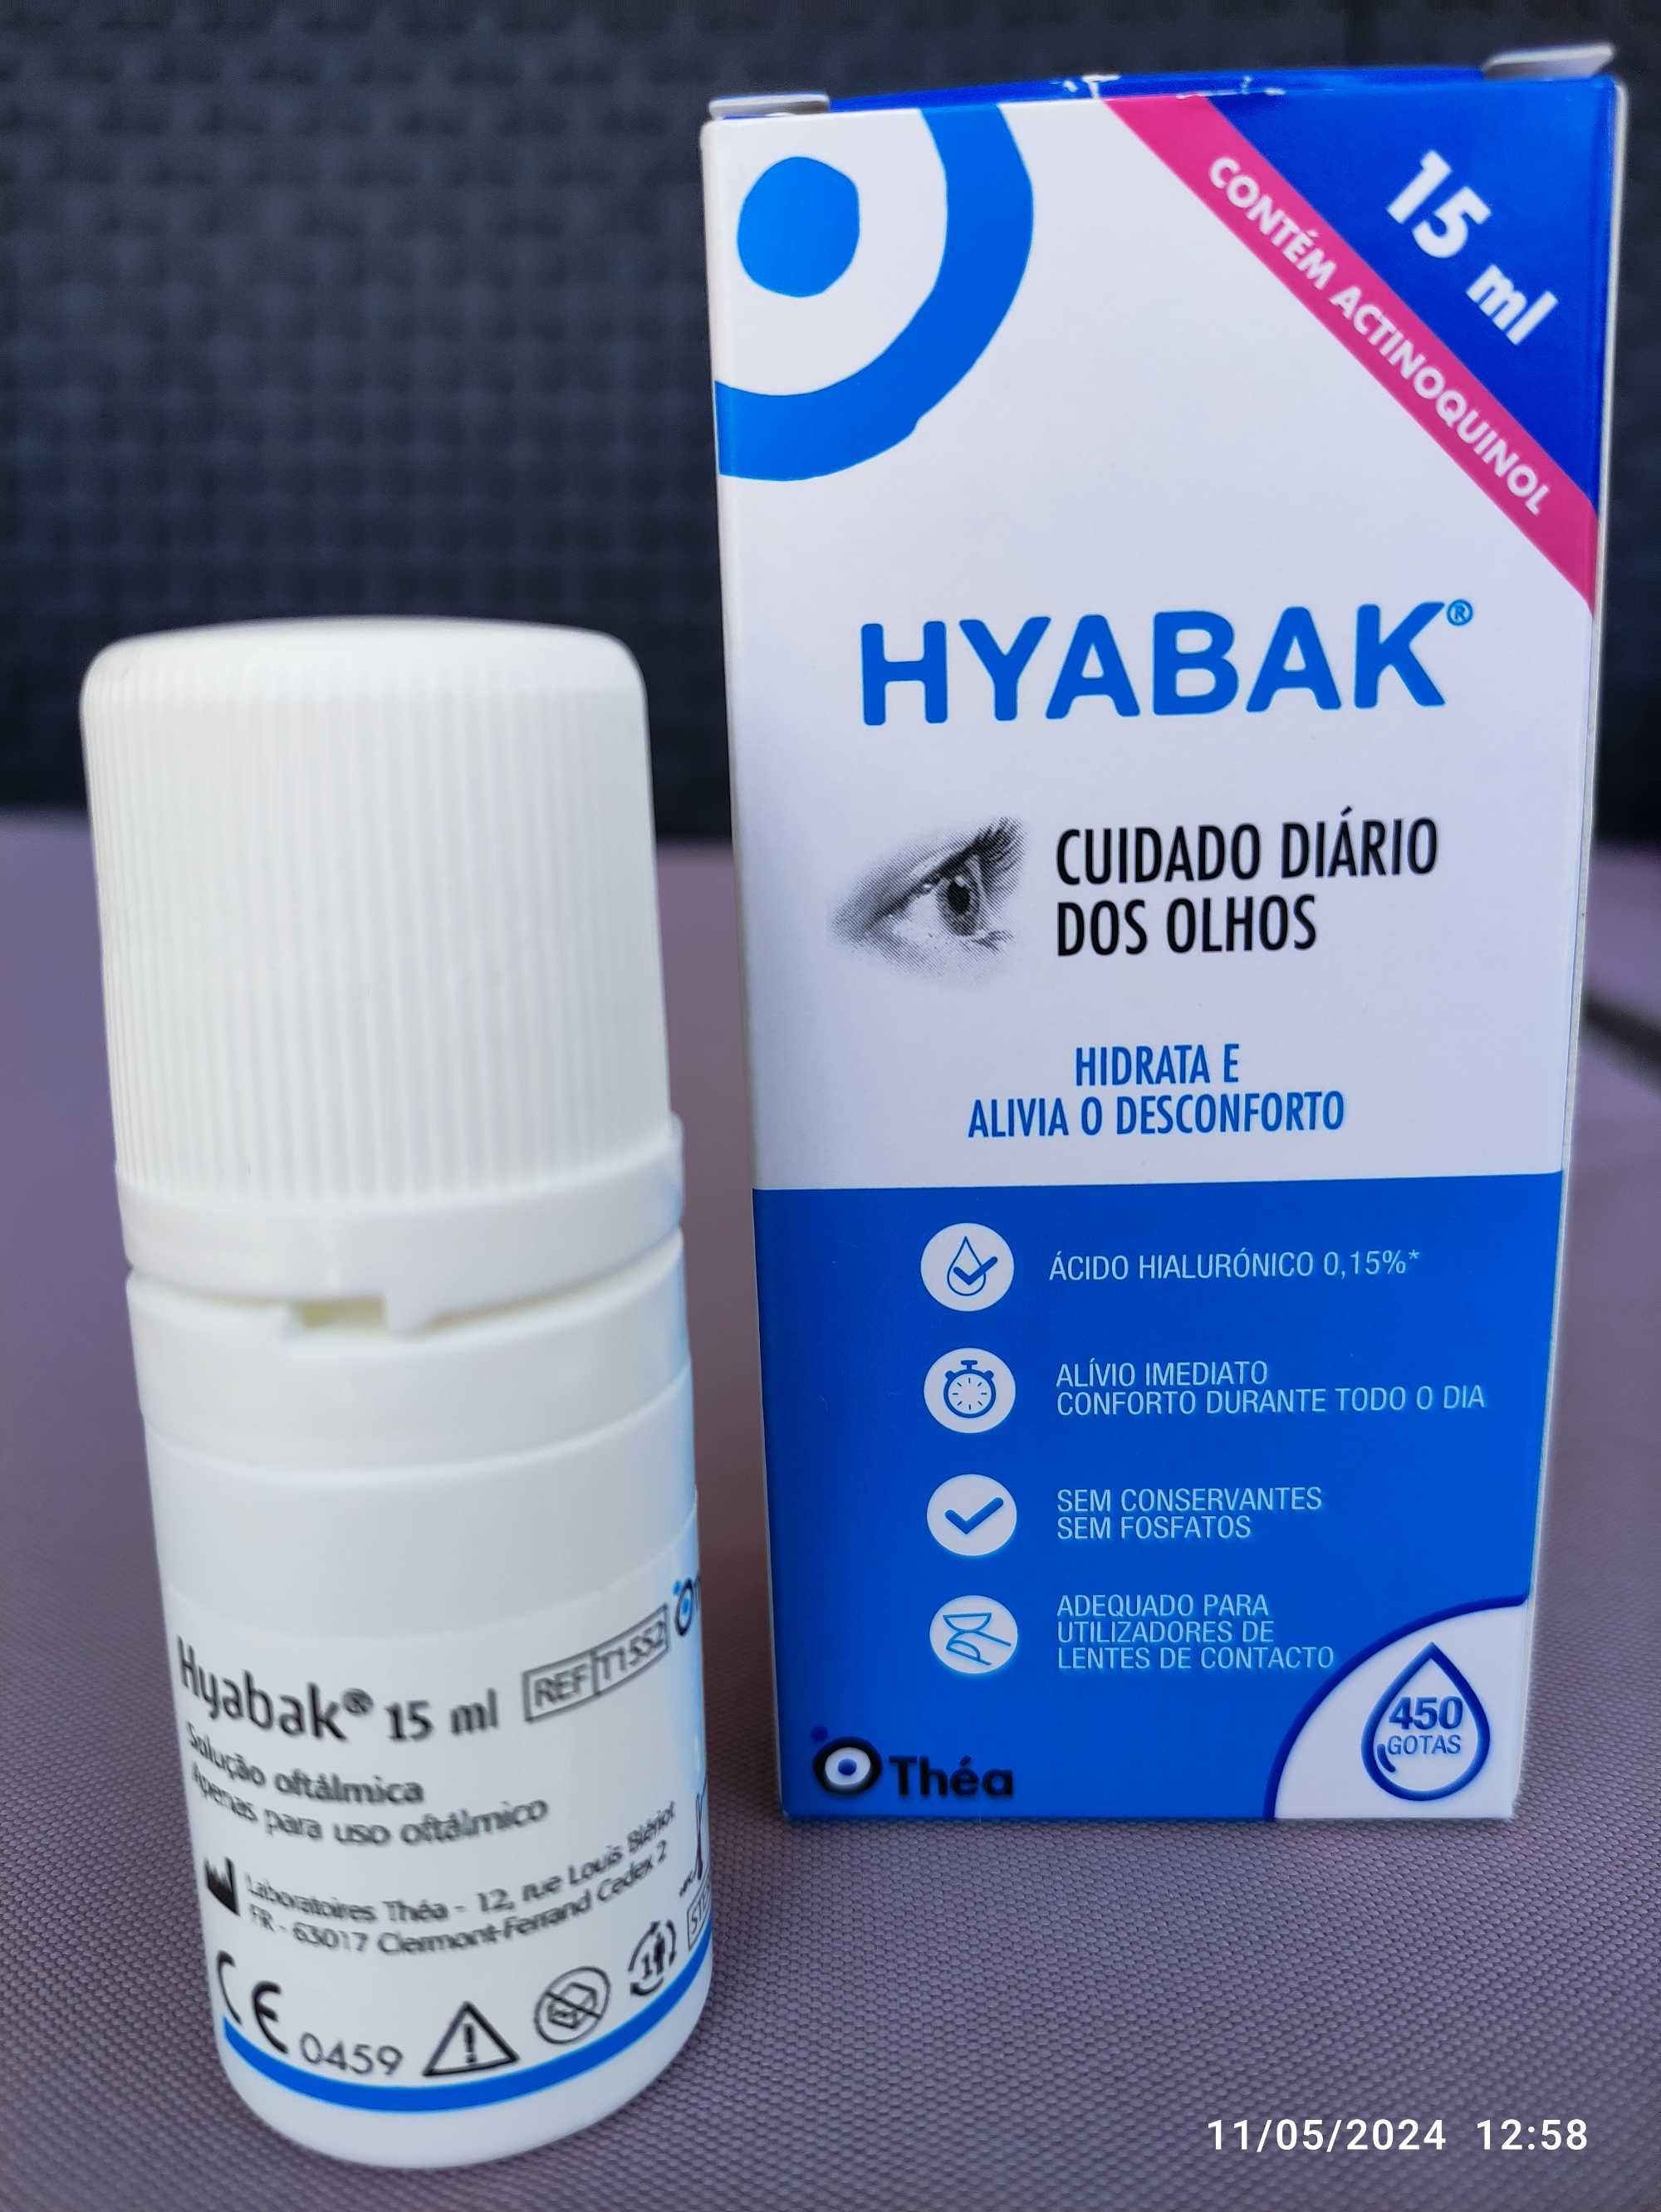 Hyabak 15ml - Cuidado diário dos olhos